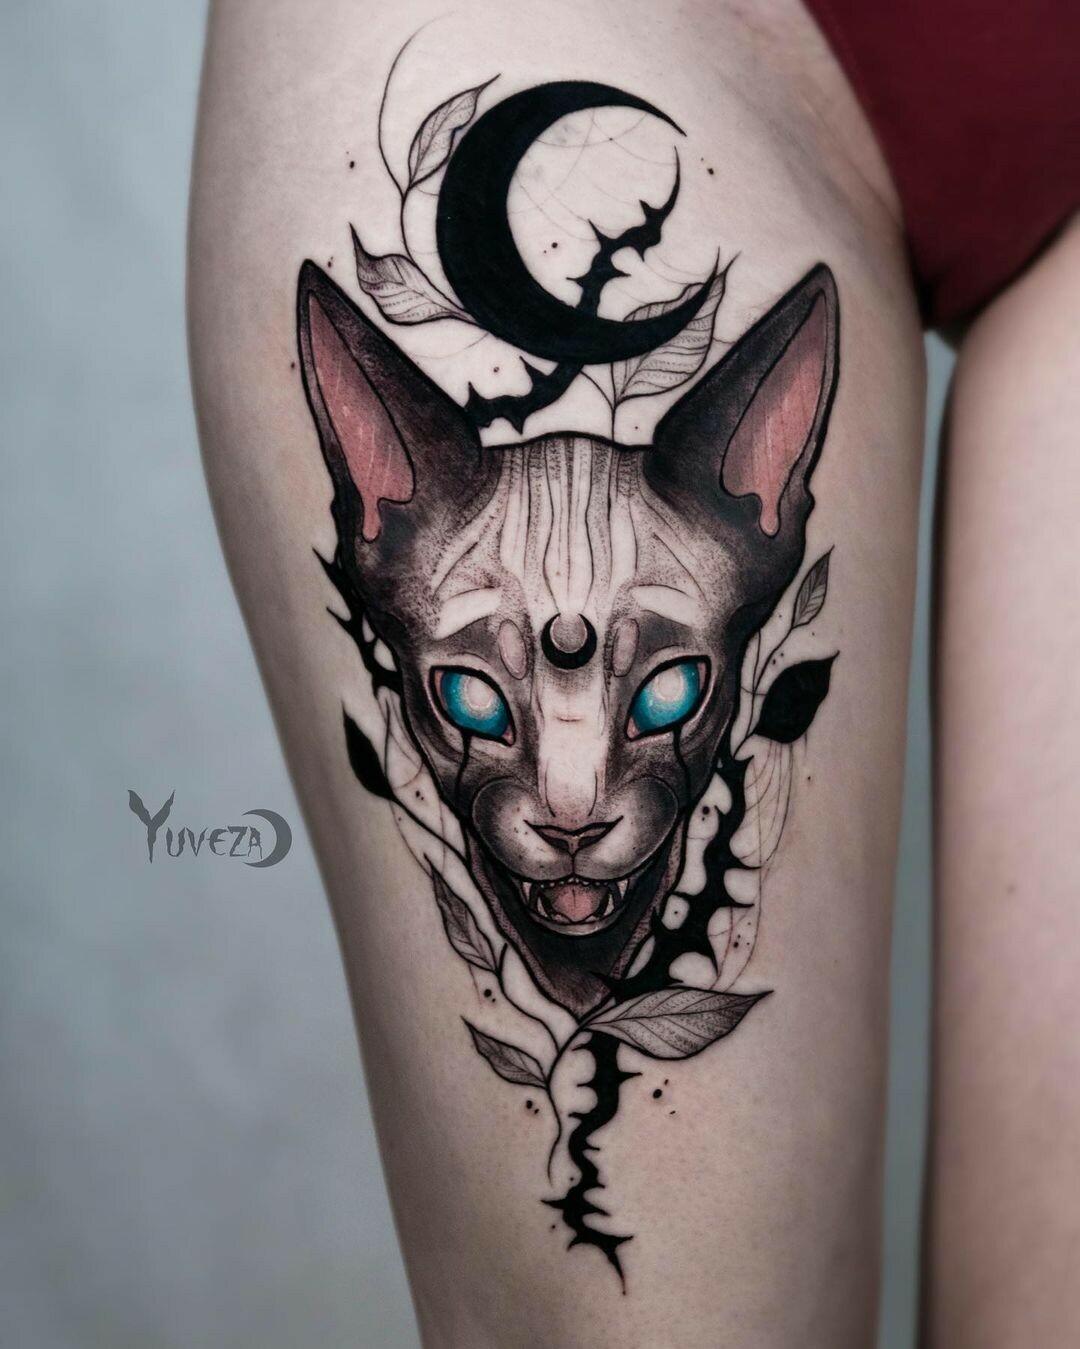 Inksearch tattoo Yuveza